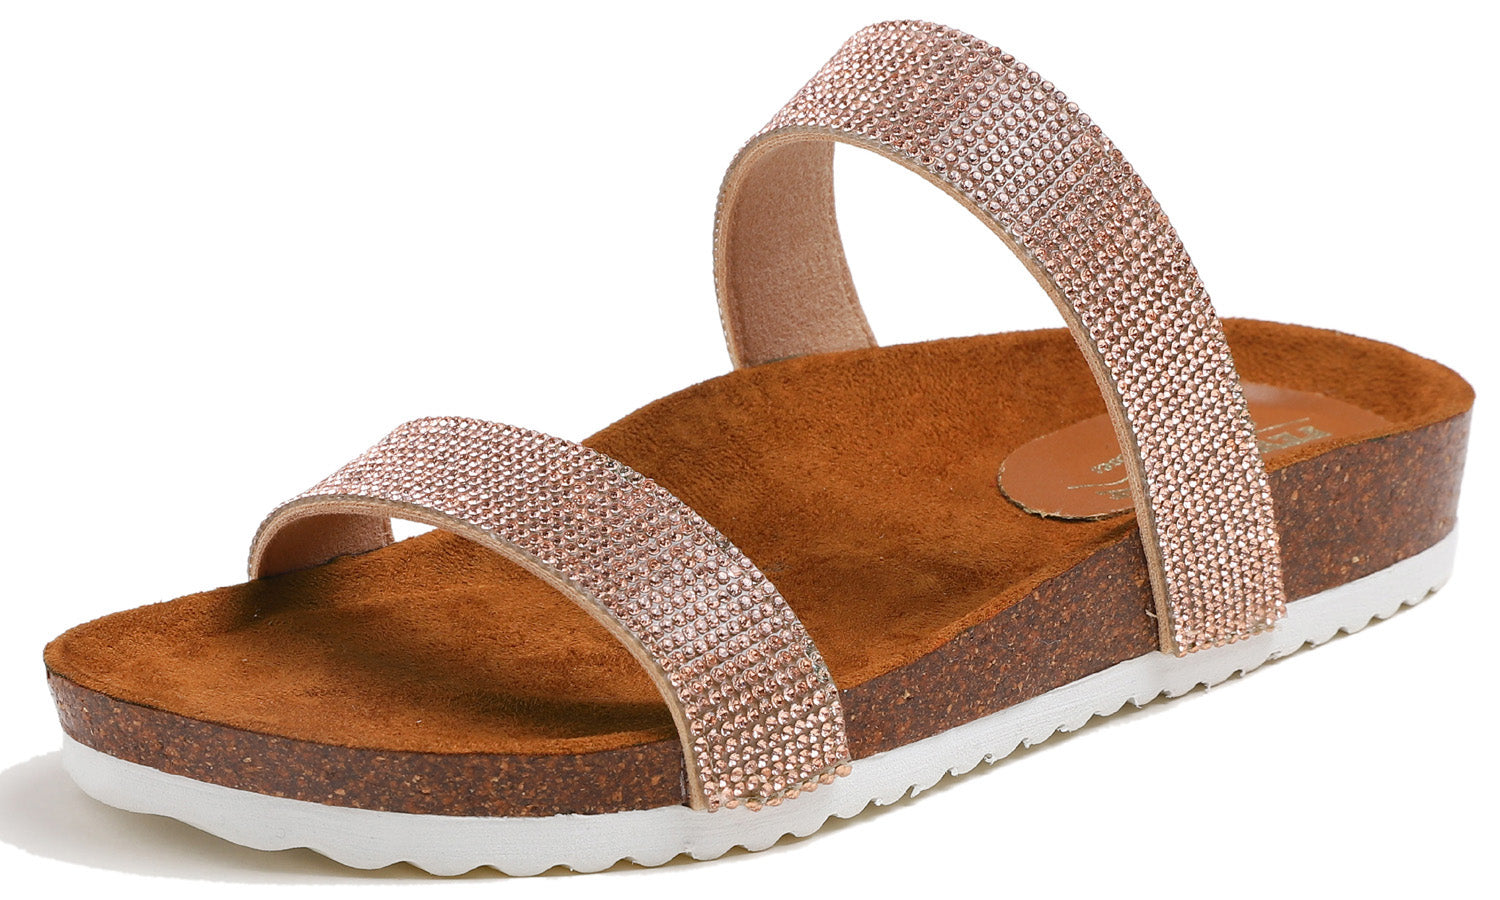 Feversole Women's Fashion Sparkle Slide Sandals Soft Cork Footbed Comfort Flats Rose Gold Rhinestone